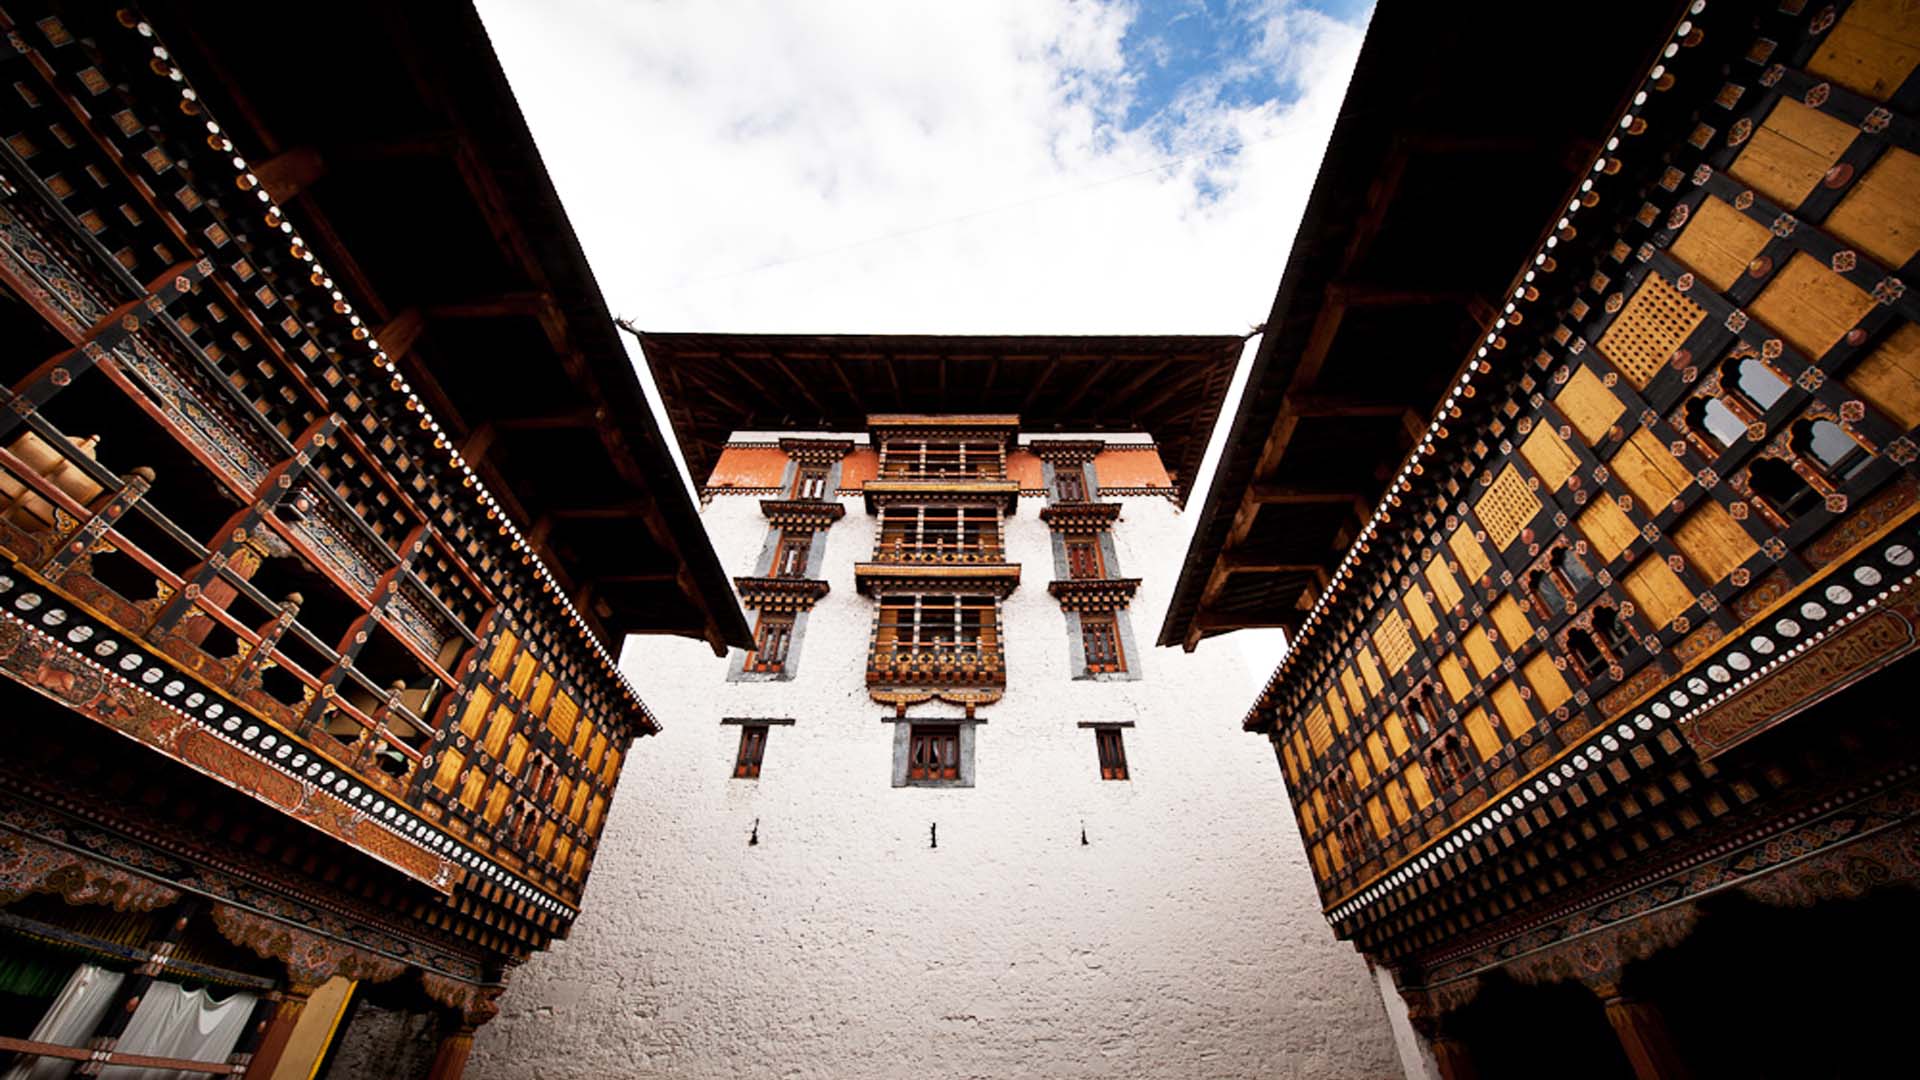 Bhutanese art and Architecture